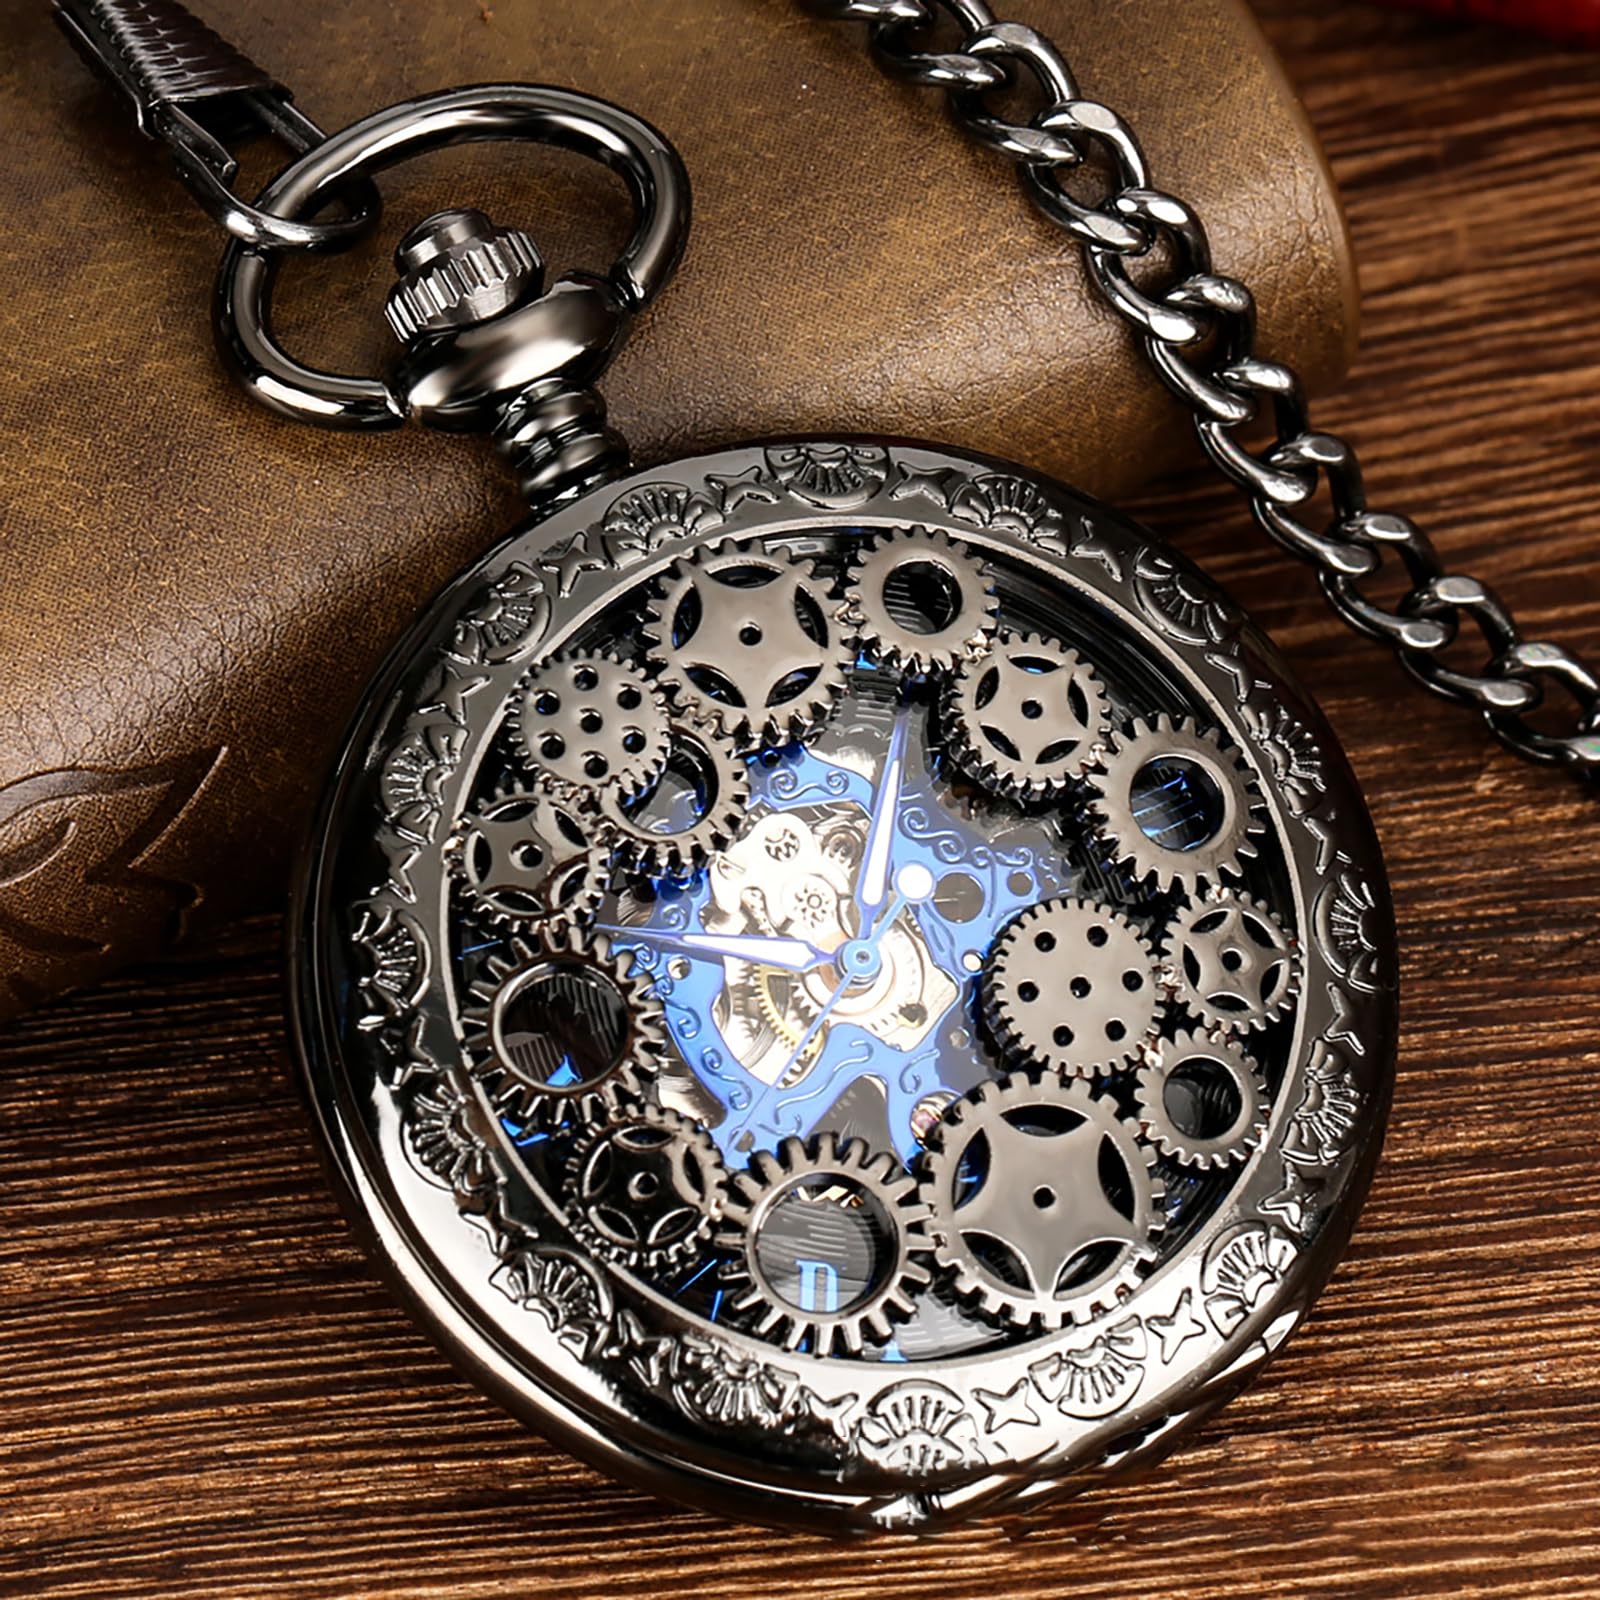 DAGIJIRD Pocket Watch Skeleton Mechanical Double Case Roman Numerals Pocket Watch for Men Women